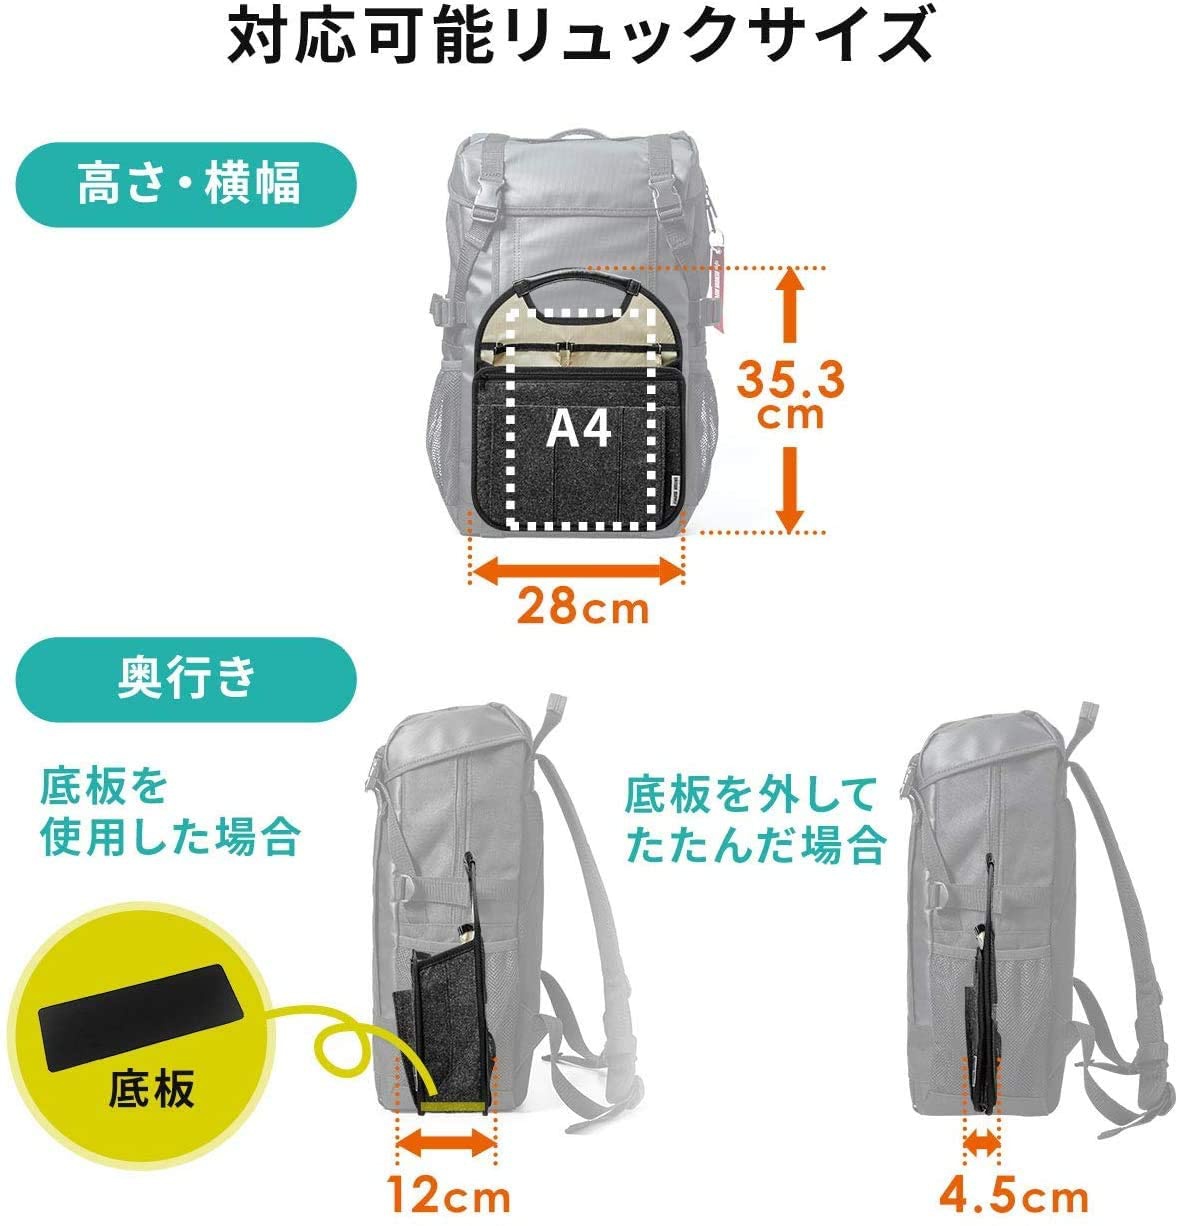 SANWA SUPPLY(サンワサプライ) バッグインバッグ 200-BAGIN017の商品画像4 